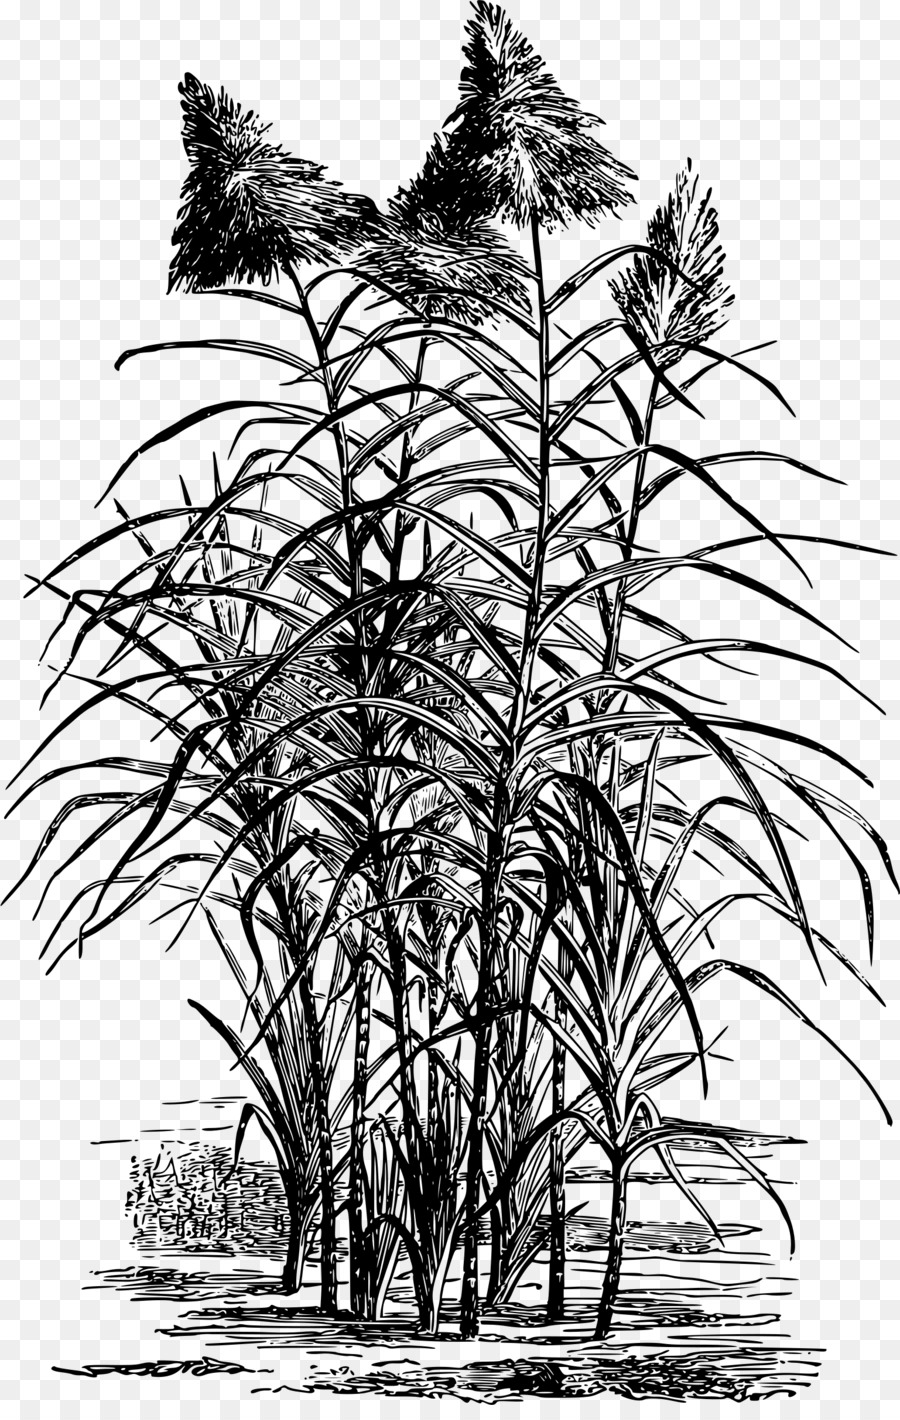 Sugarcane Drawing Candy cane Plantation - sugar png download - 1537*